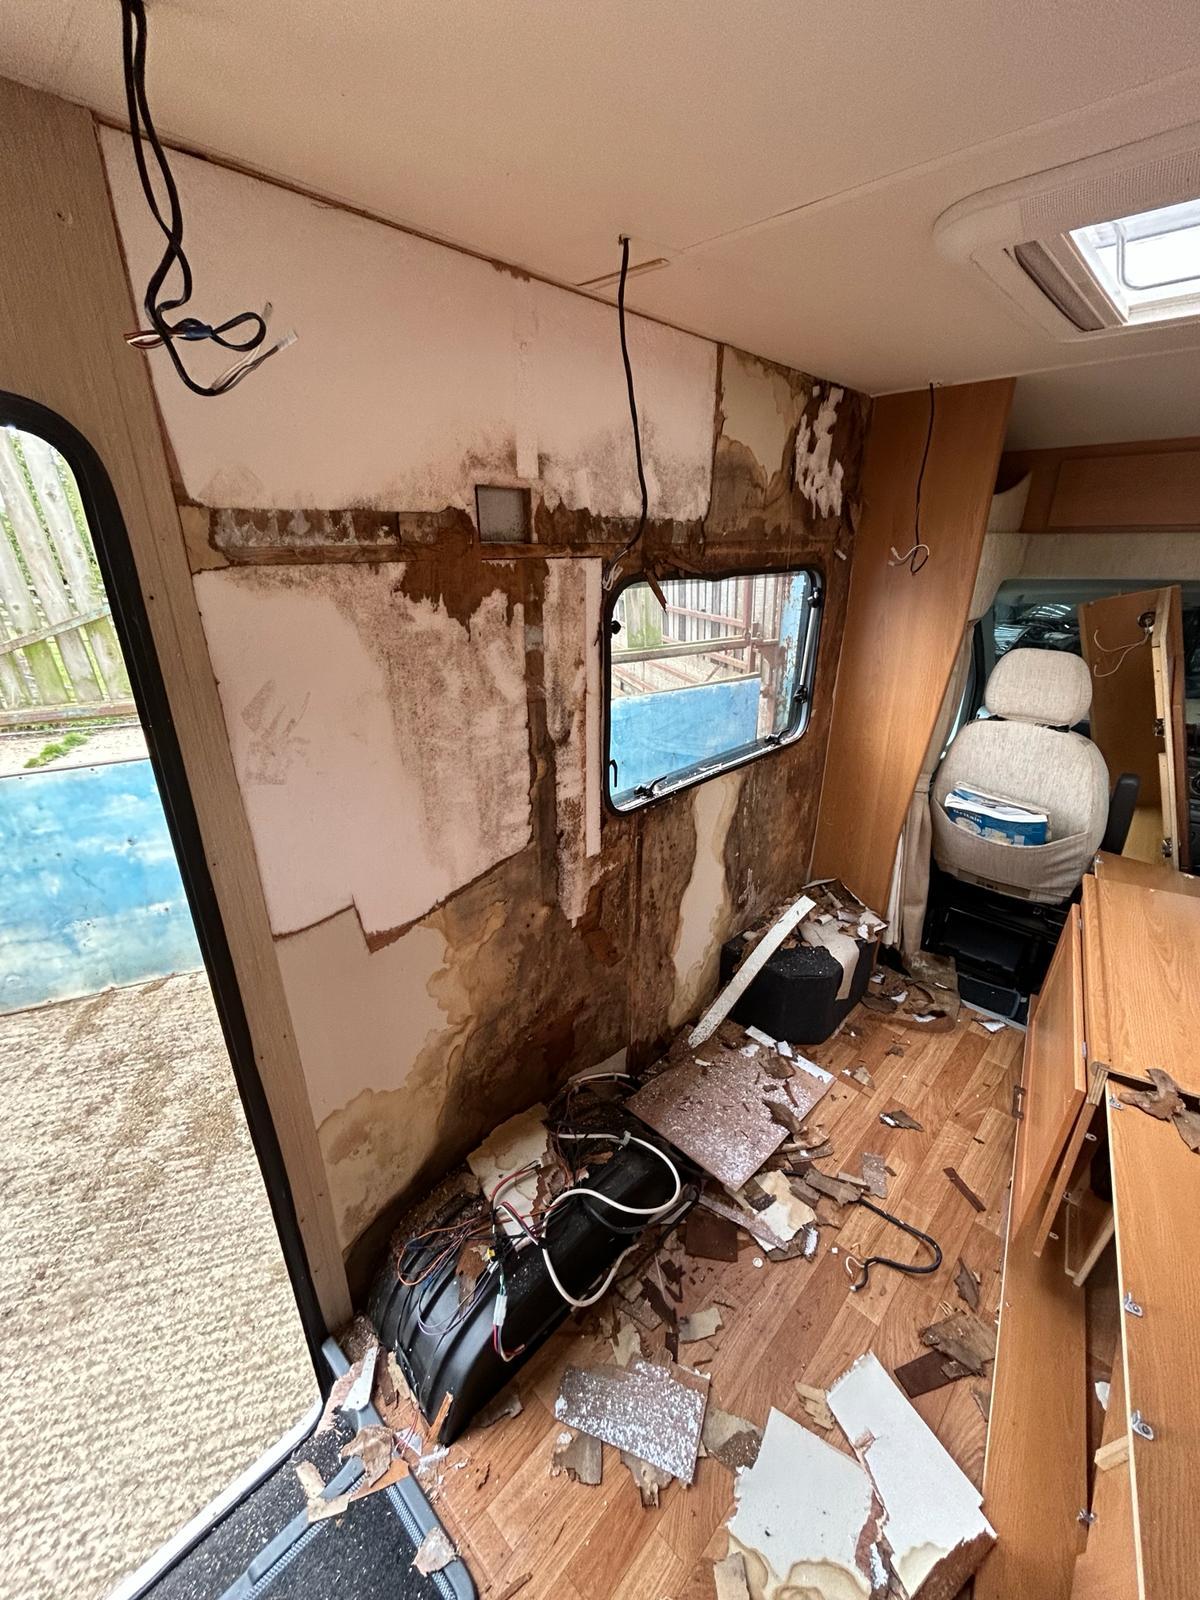 Damp damage in kitchen area of a caravan